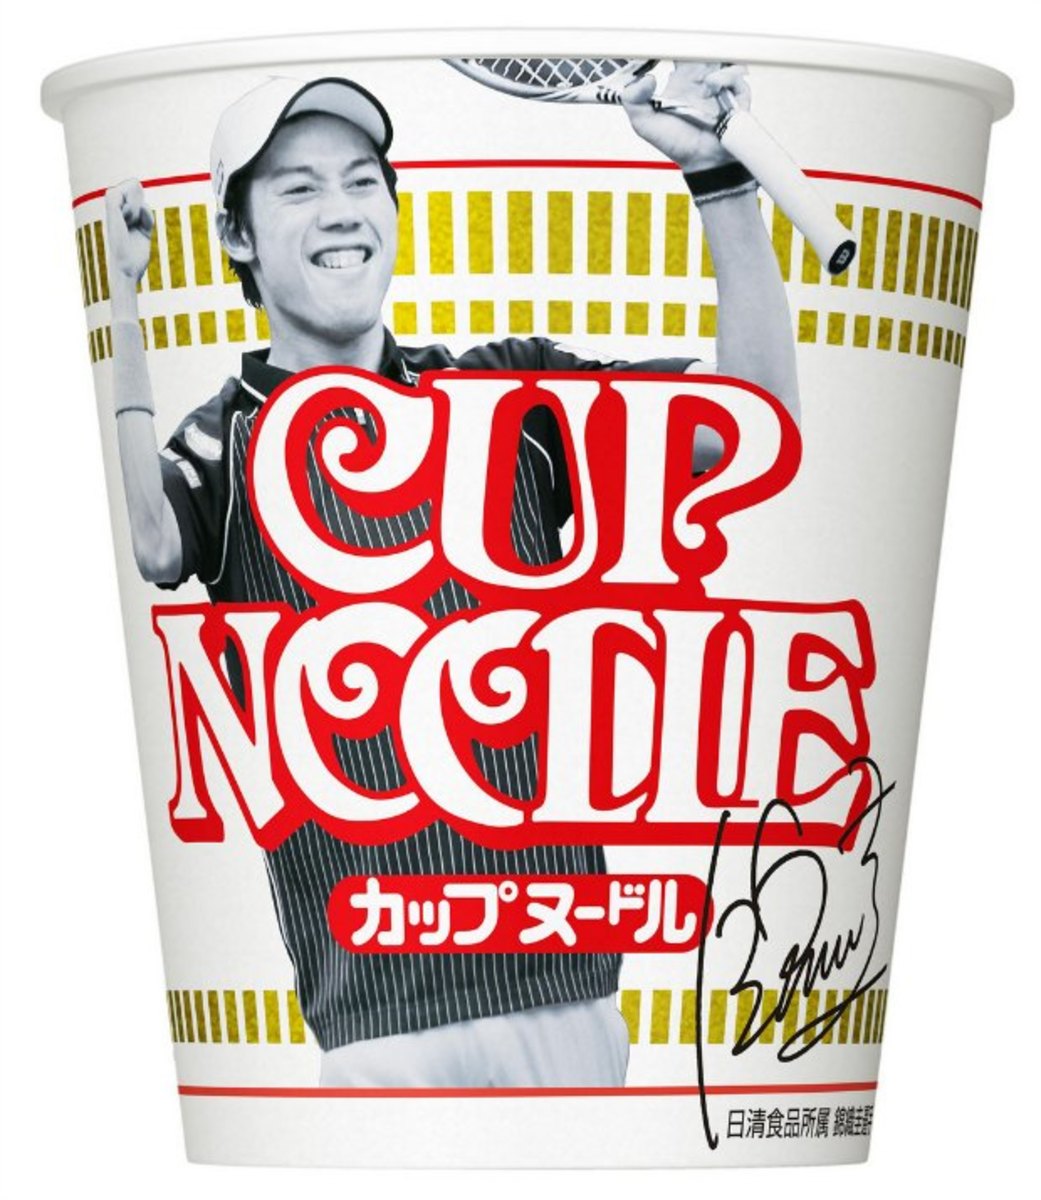 us-open-kei-nishikori-noodle-image.jpg